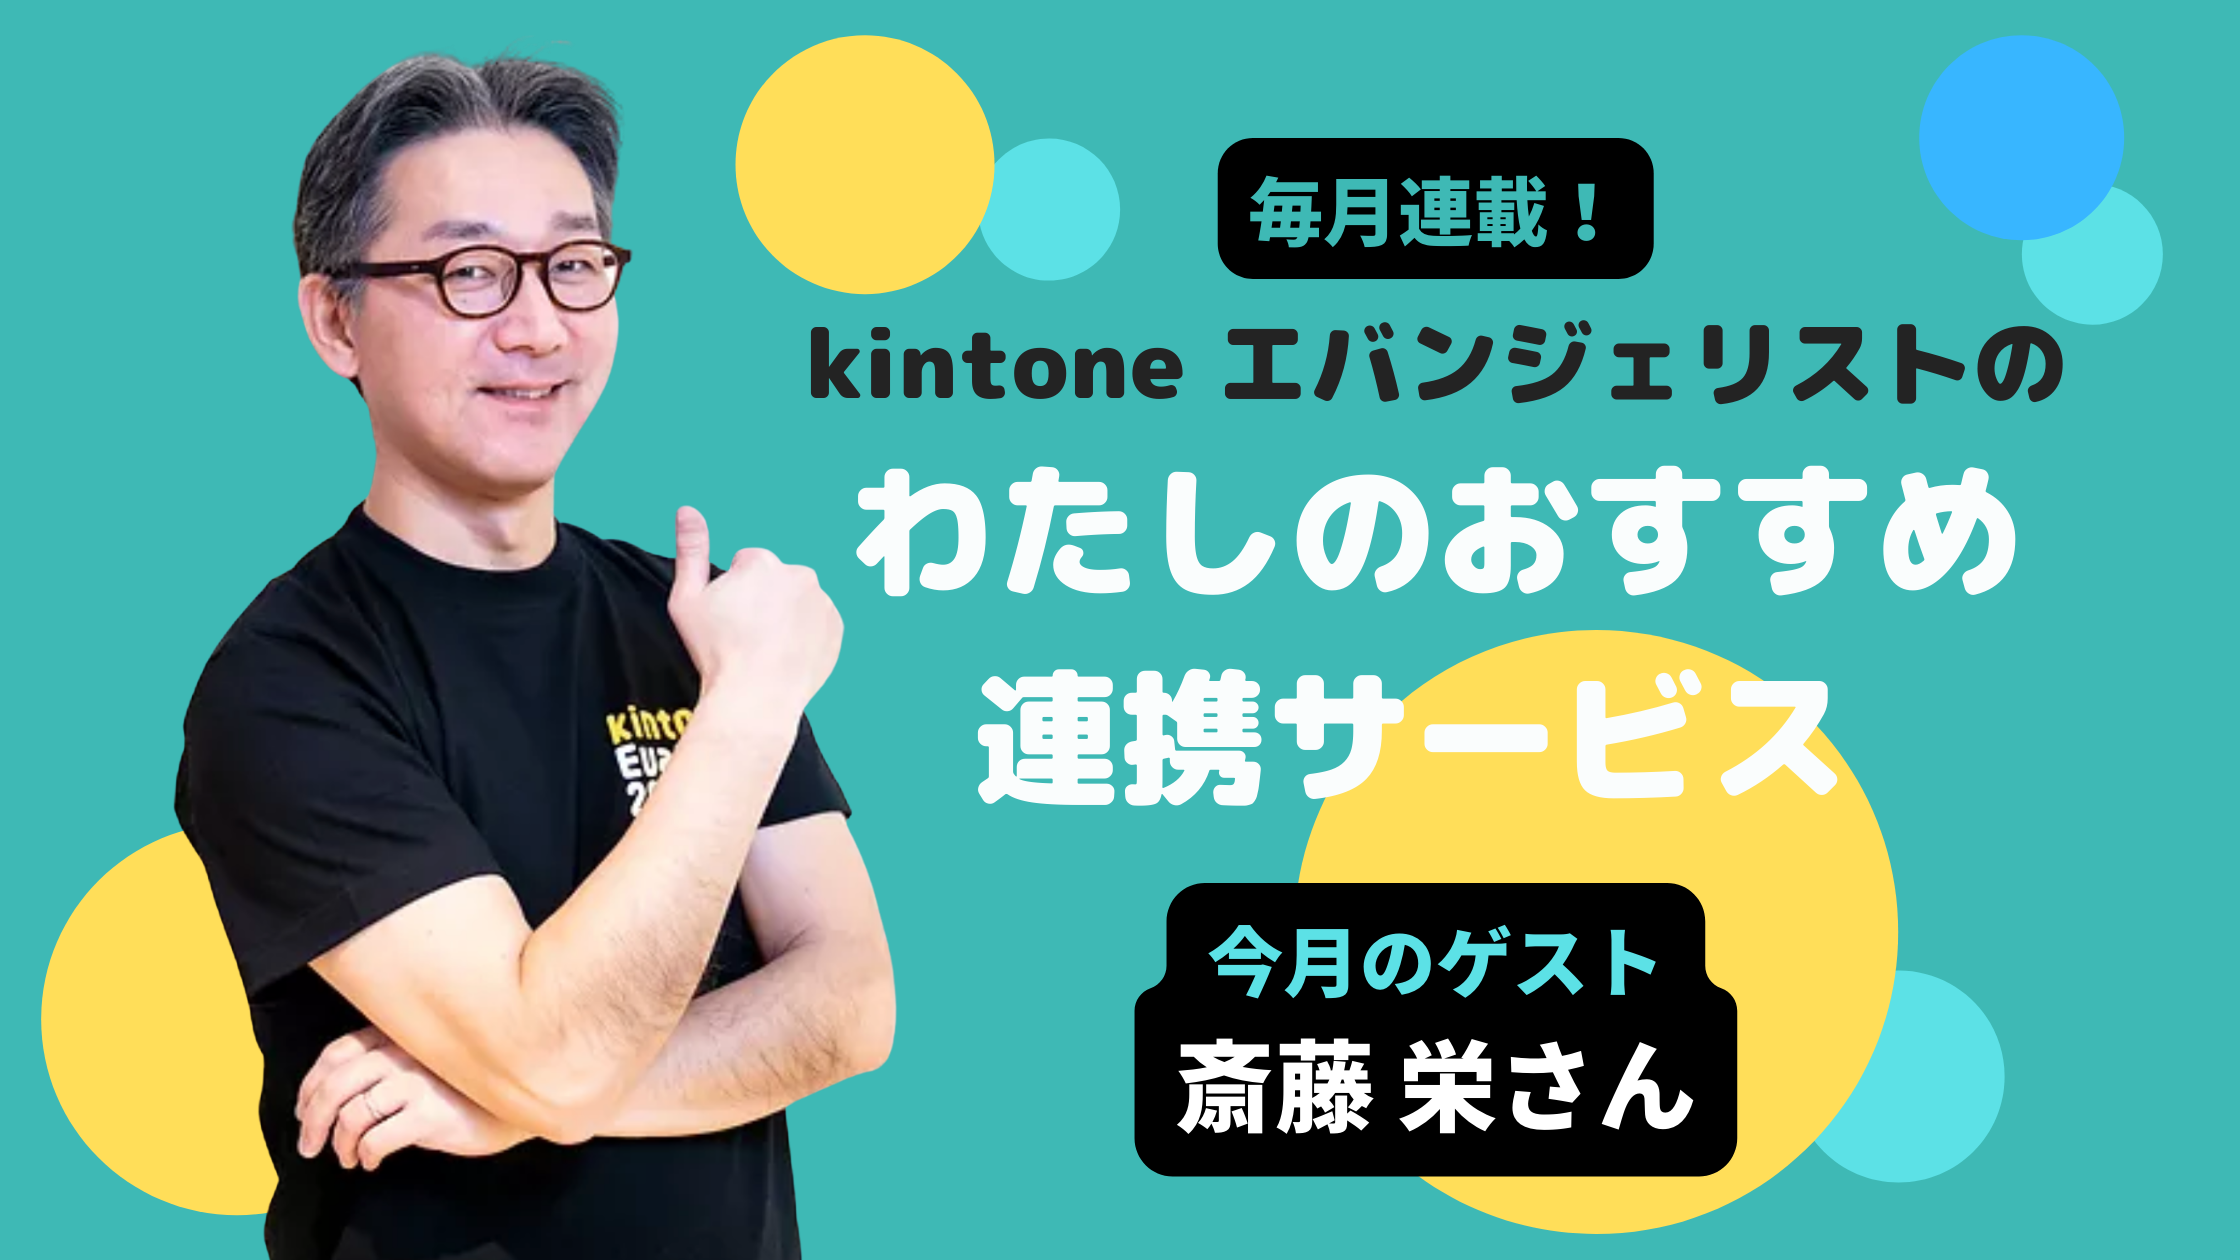 kintone 内で連携サービスの設定が完結！kintone の